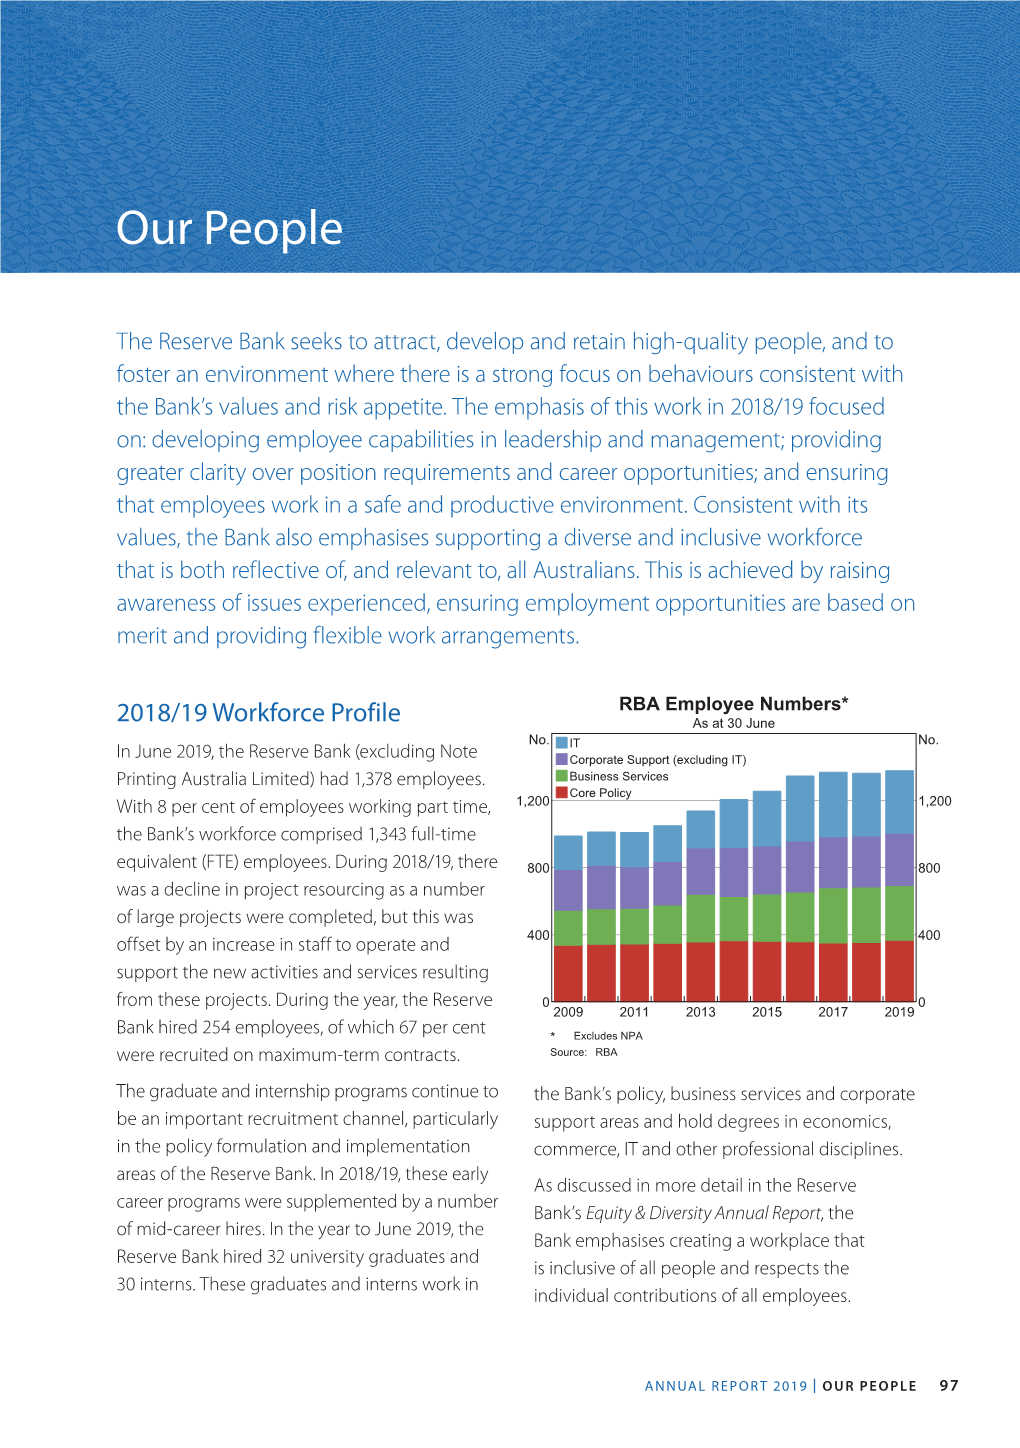 Reserve Bank of Australia Annual Report 2019